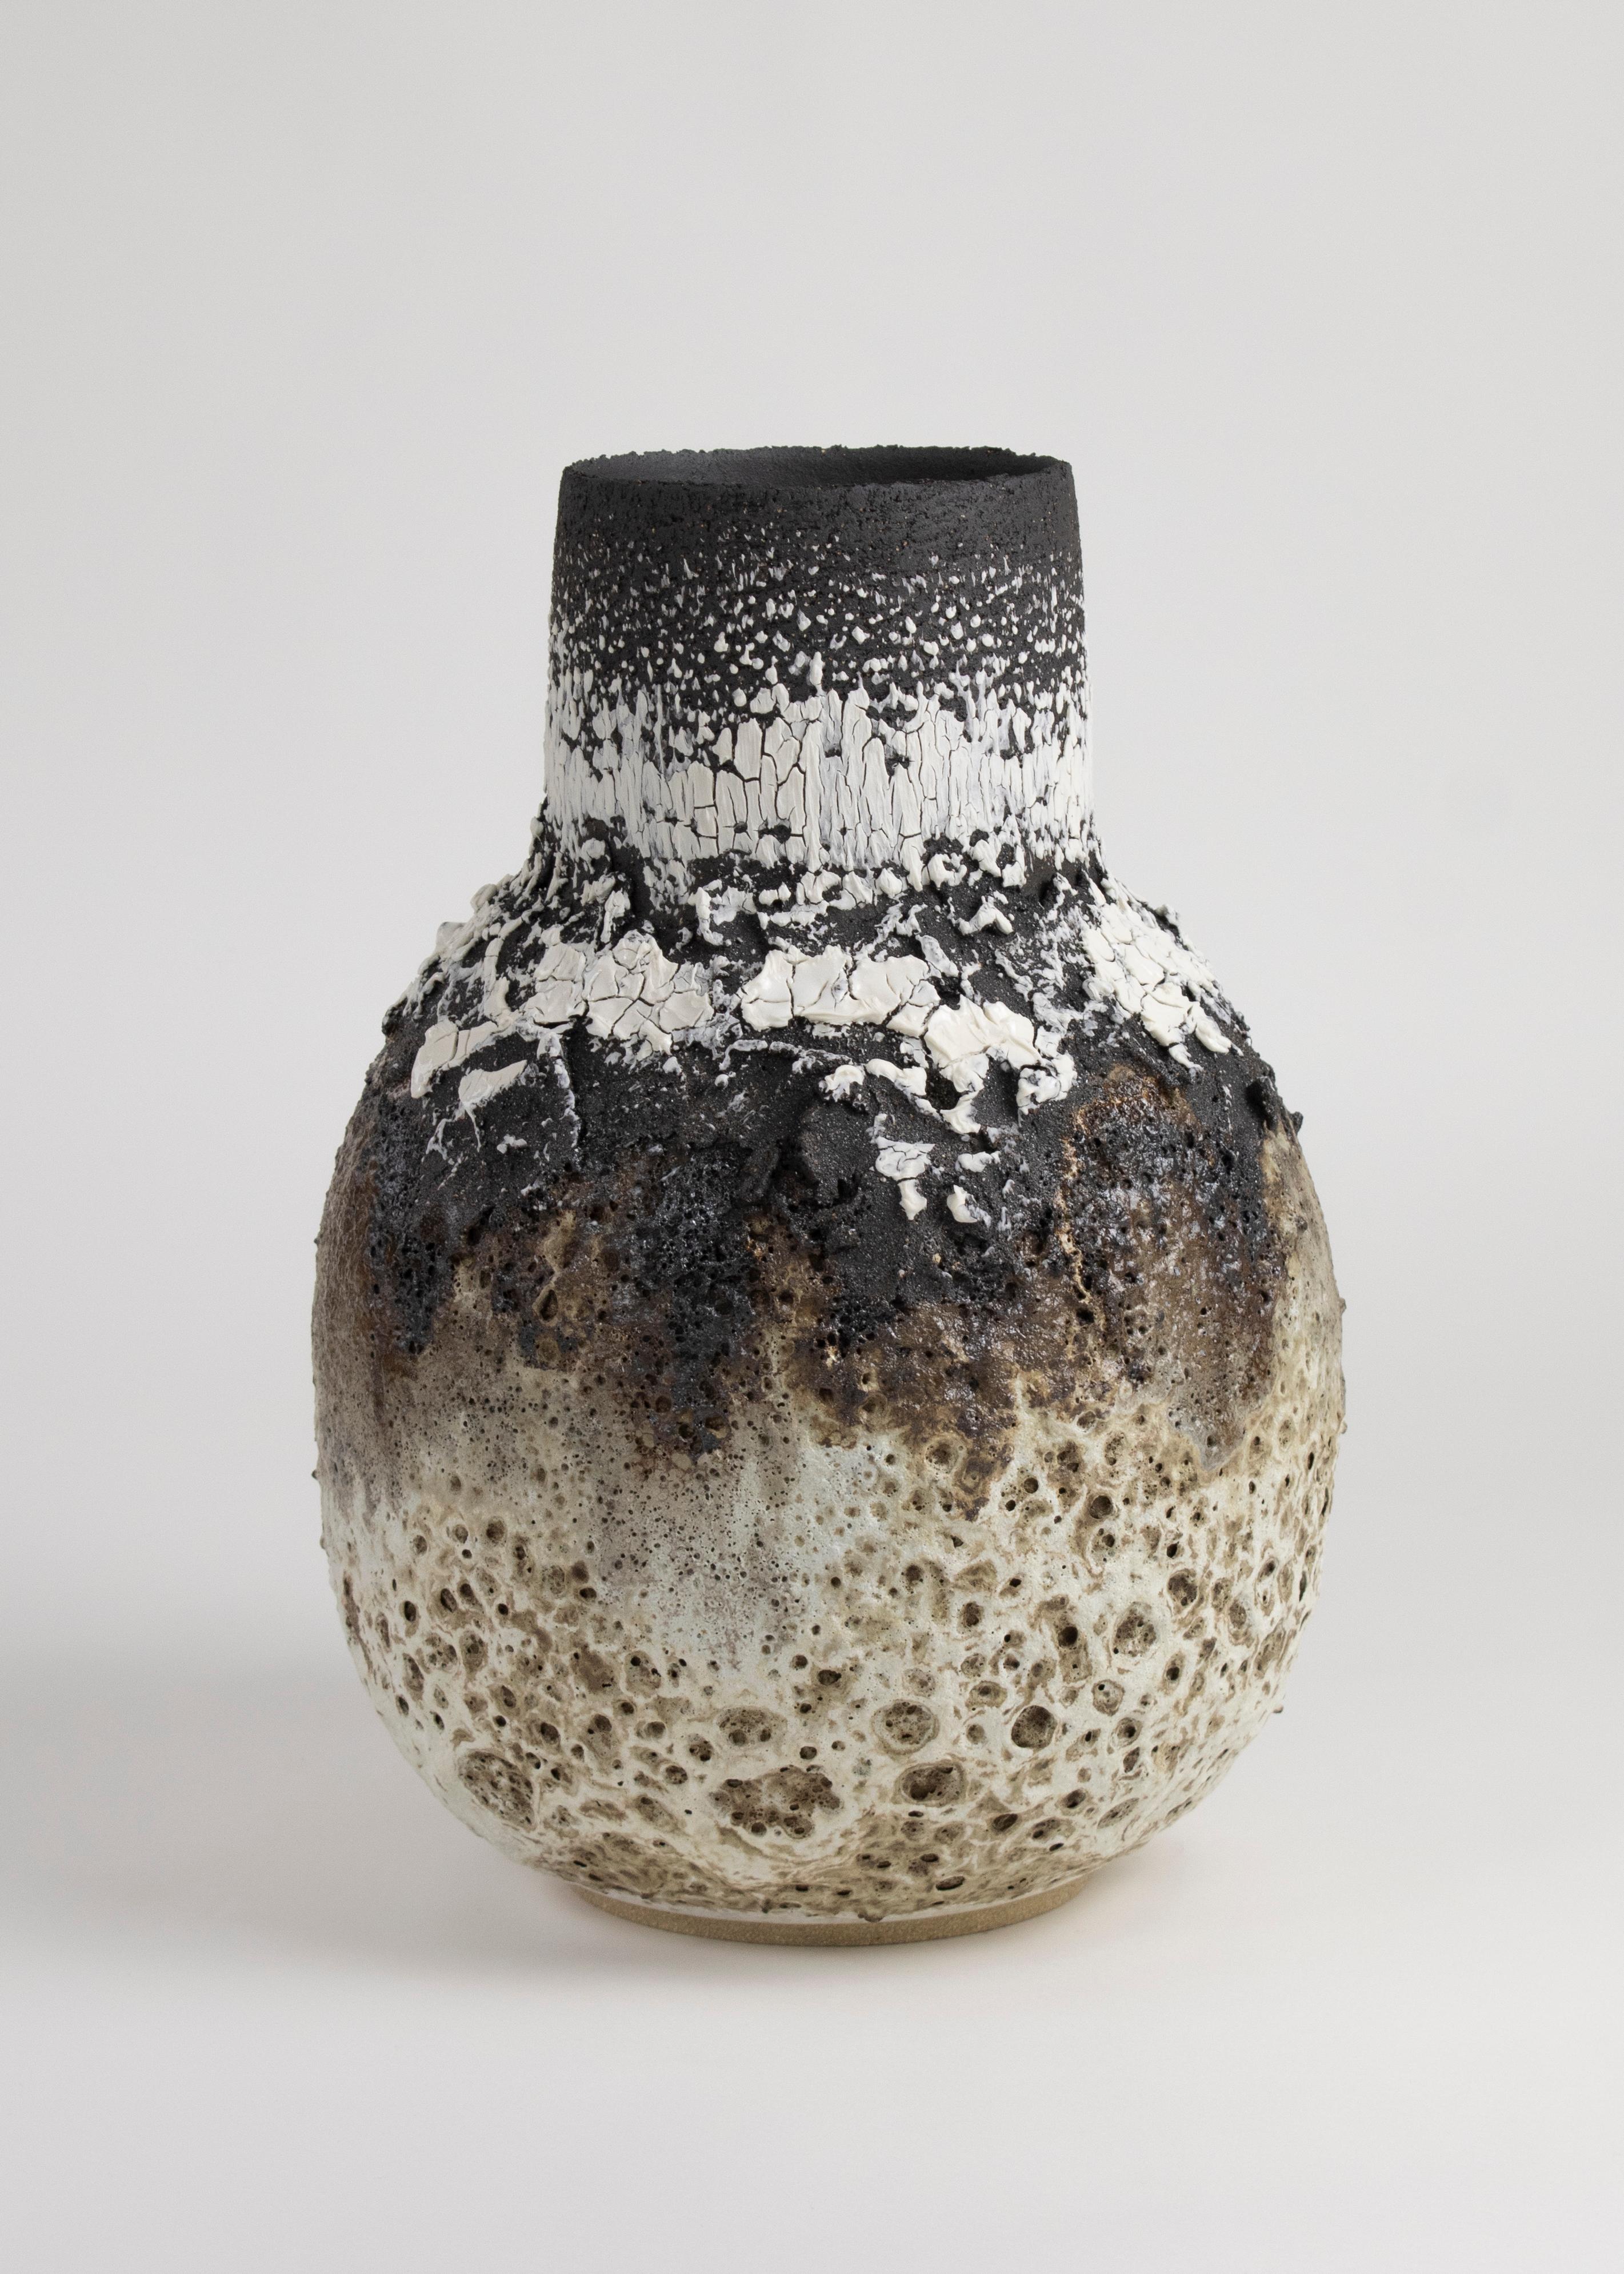 Organic Modern Black, White & Mocha Large Heavily Textured Stoneware, Porcelain Volcanic Vessel For Sale